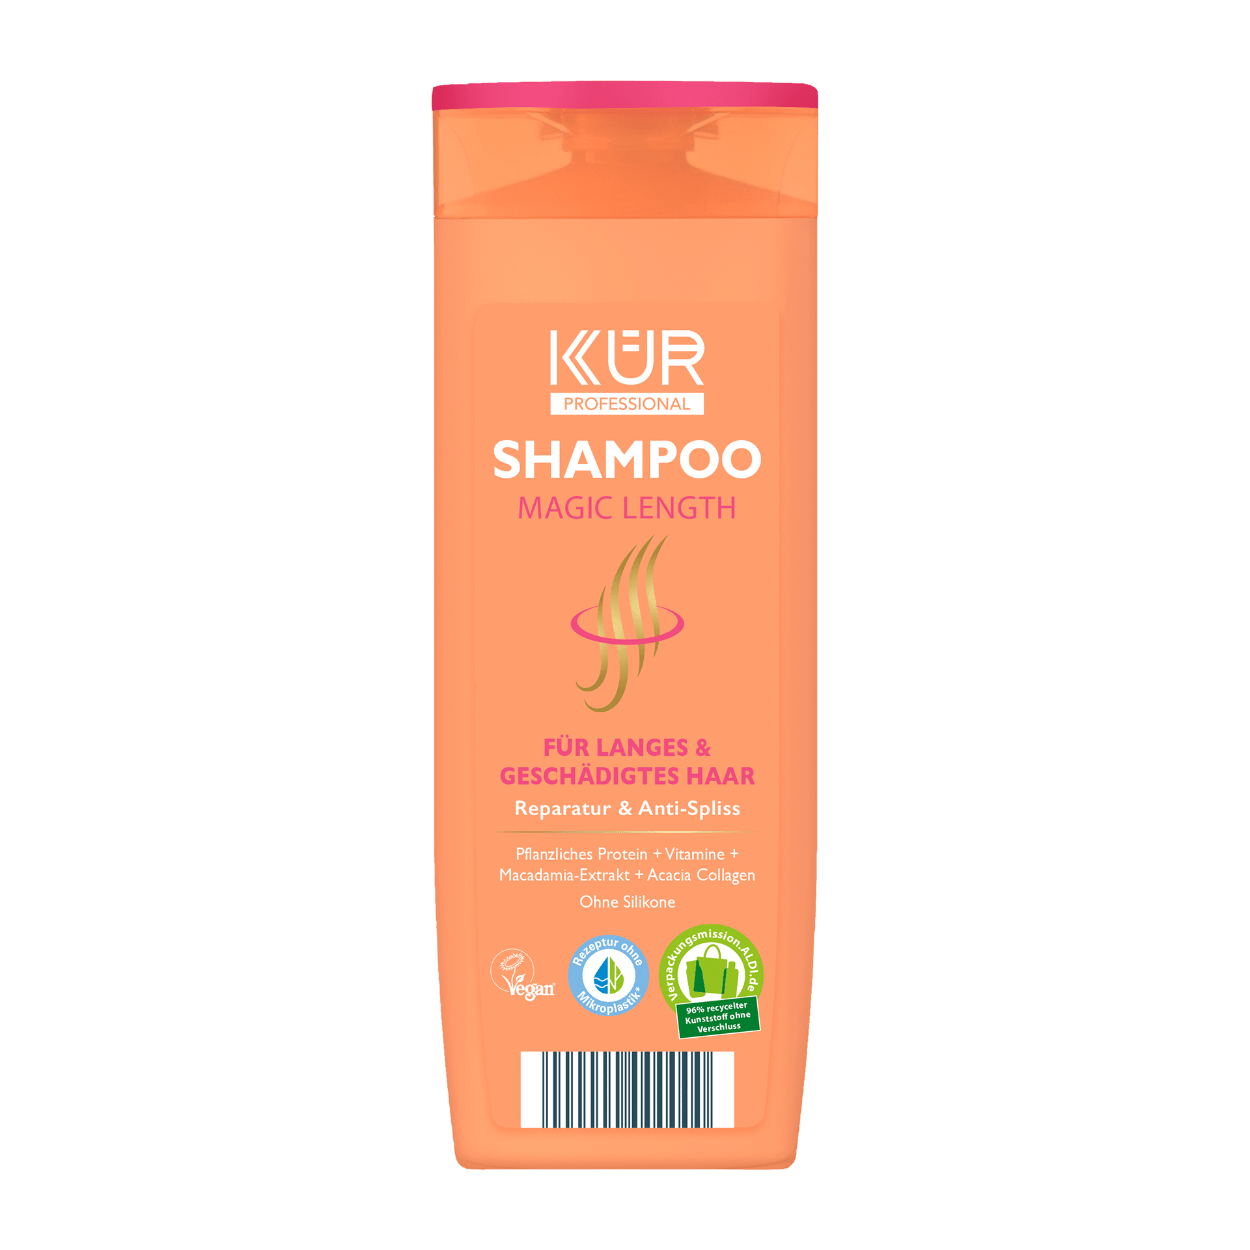 KÜR Professional Shampoo günstig bei